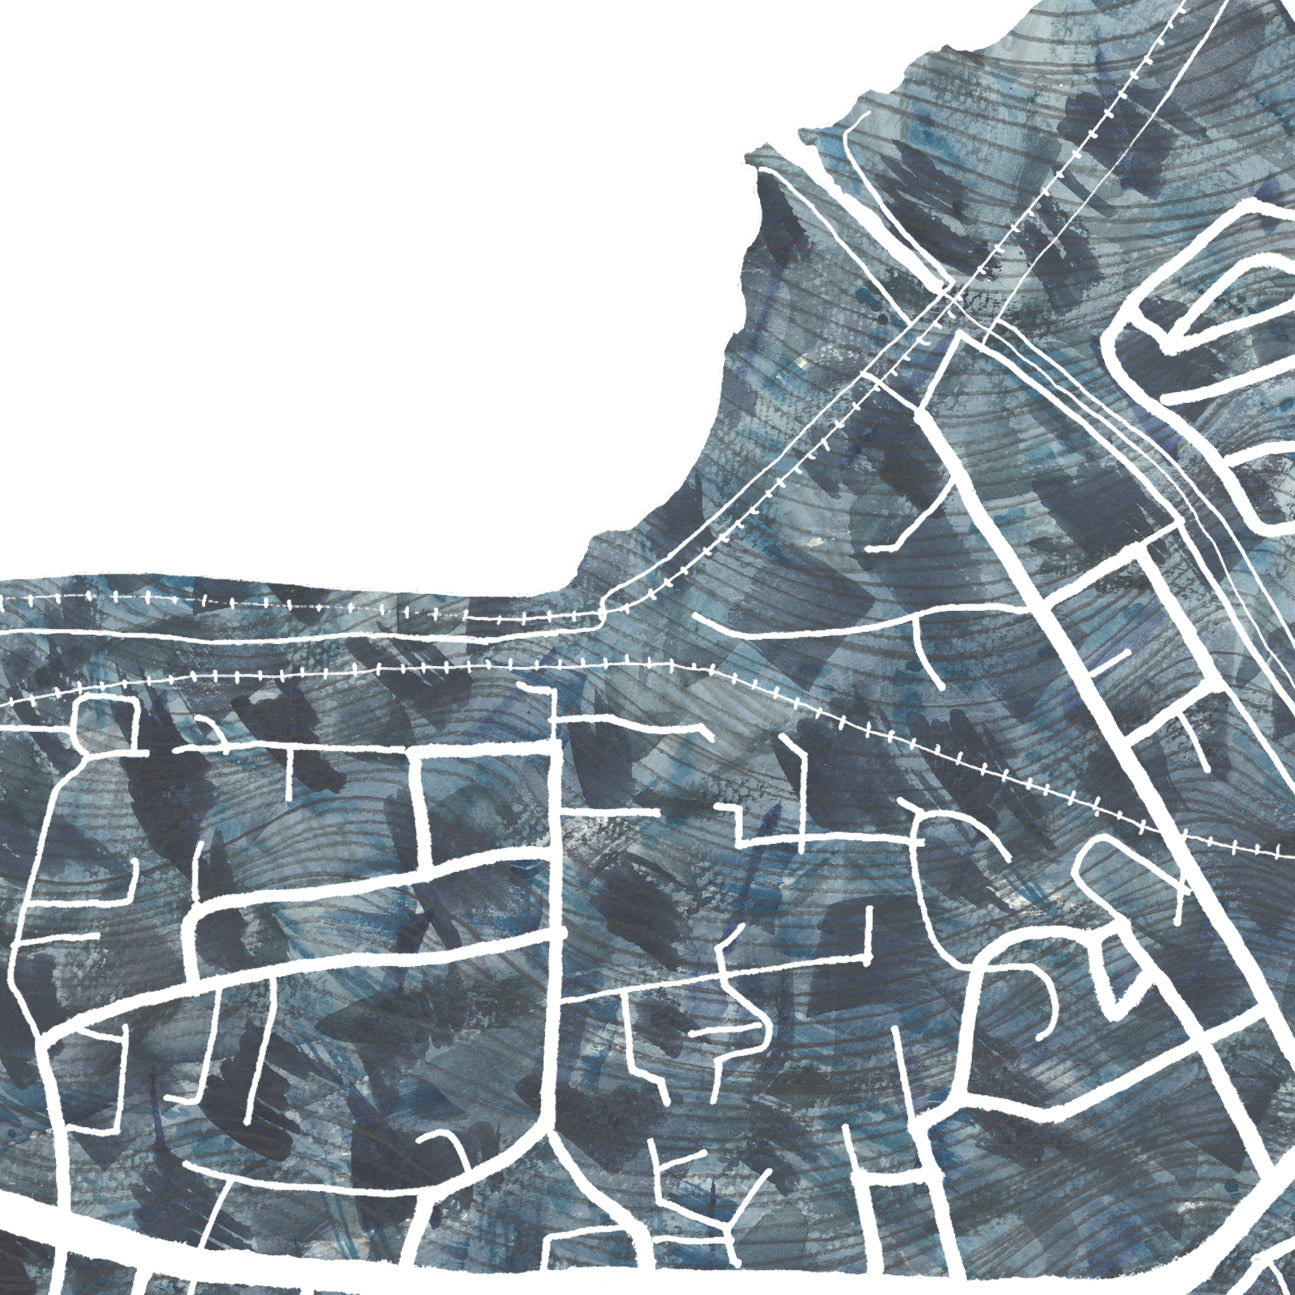 PINOLE California Urban Fabrics City Map: PRINT